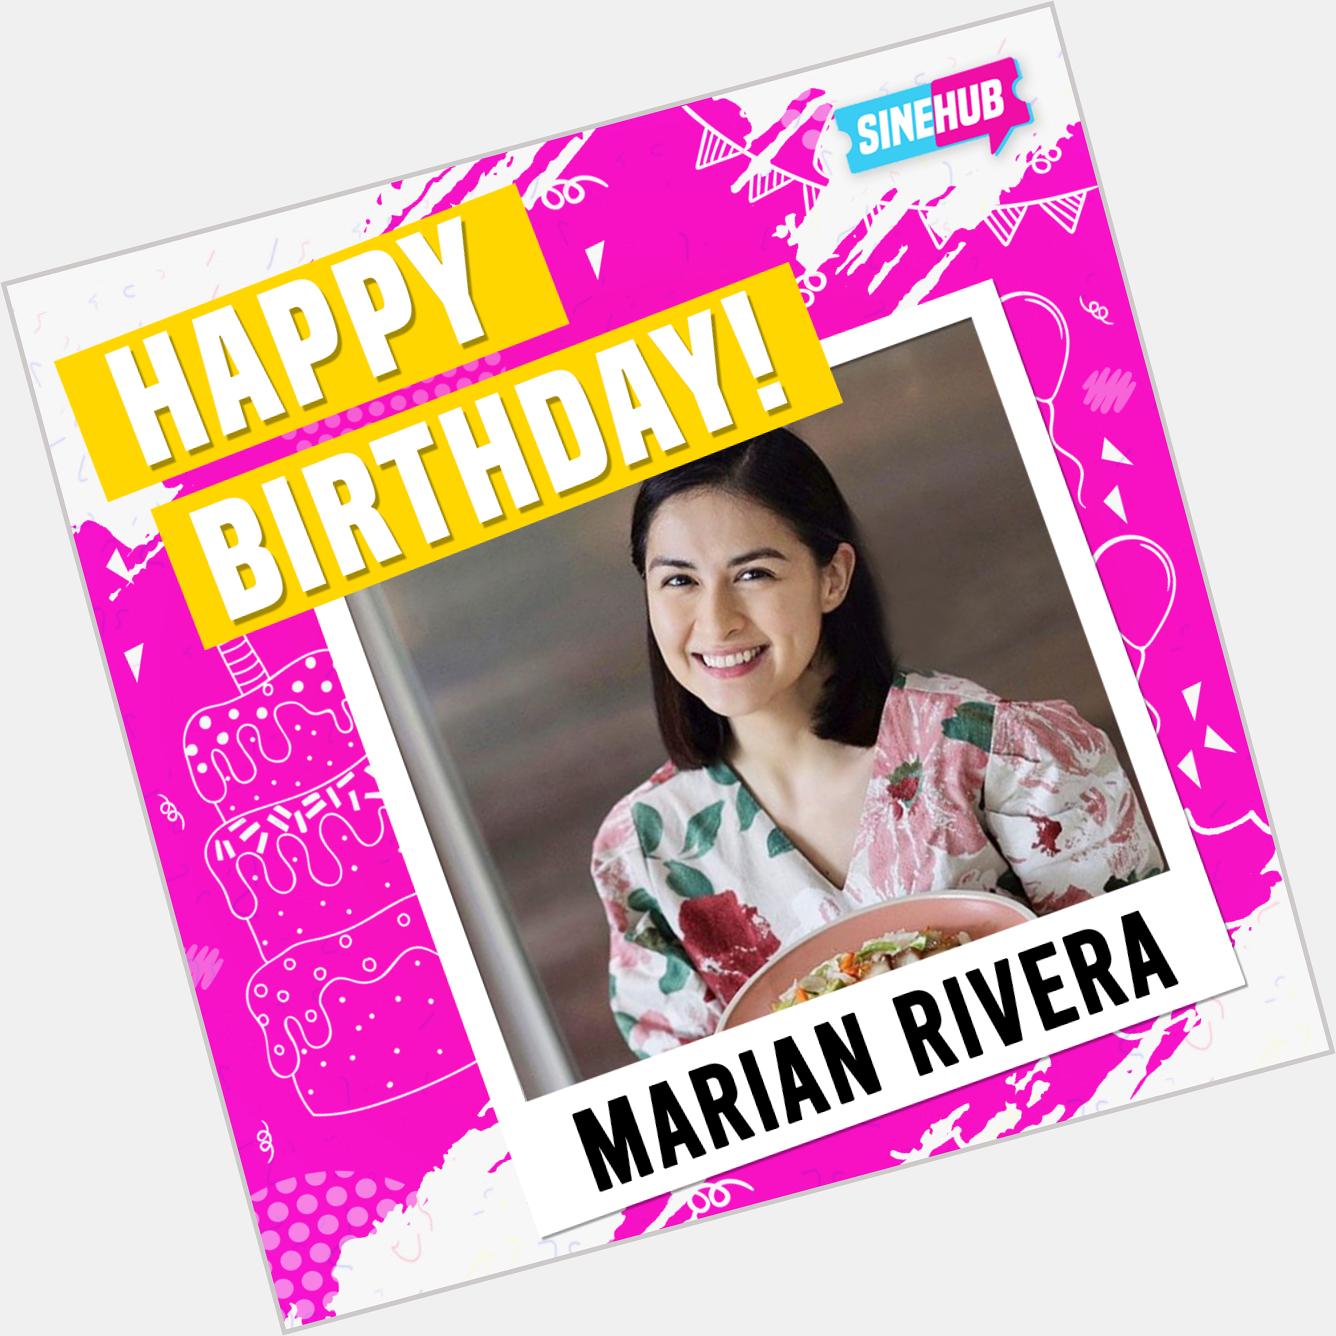 Wishing the stunning Marian Rivera a very happy birthday! 